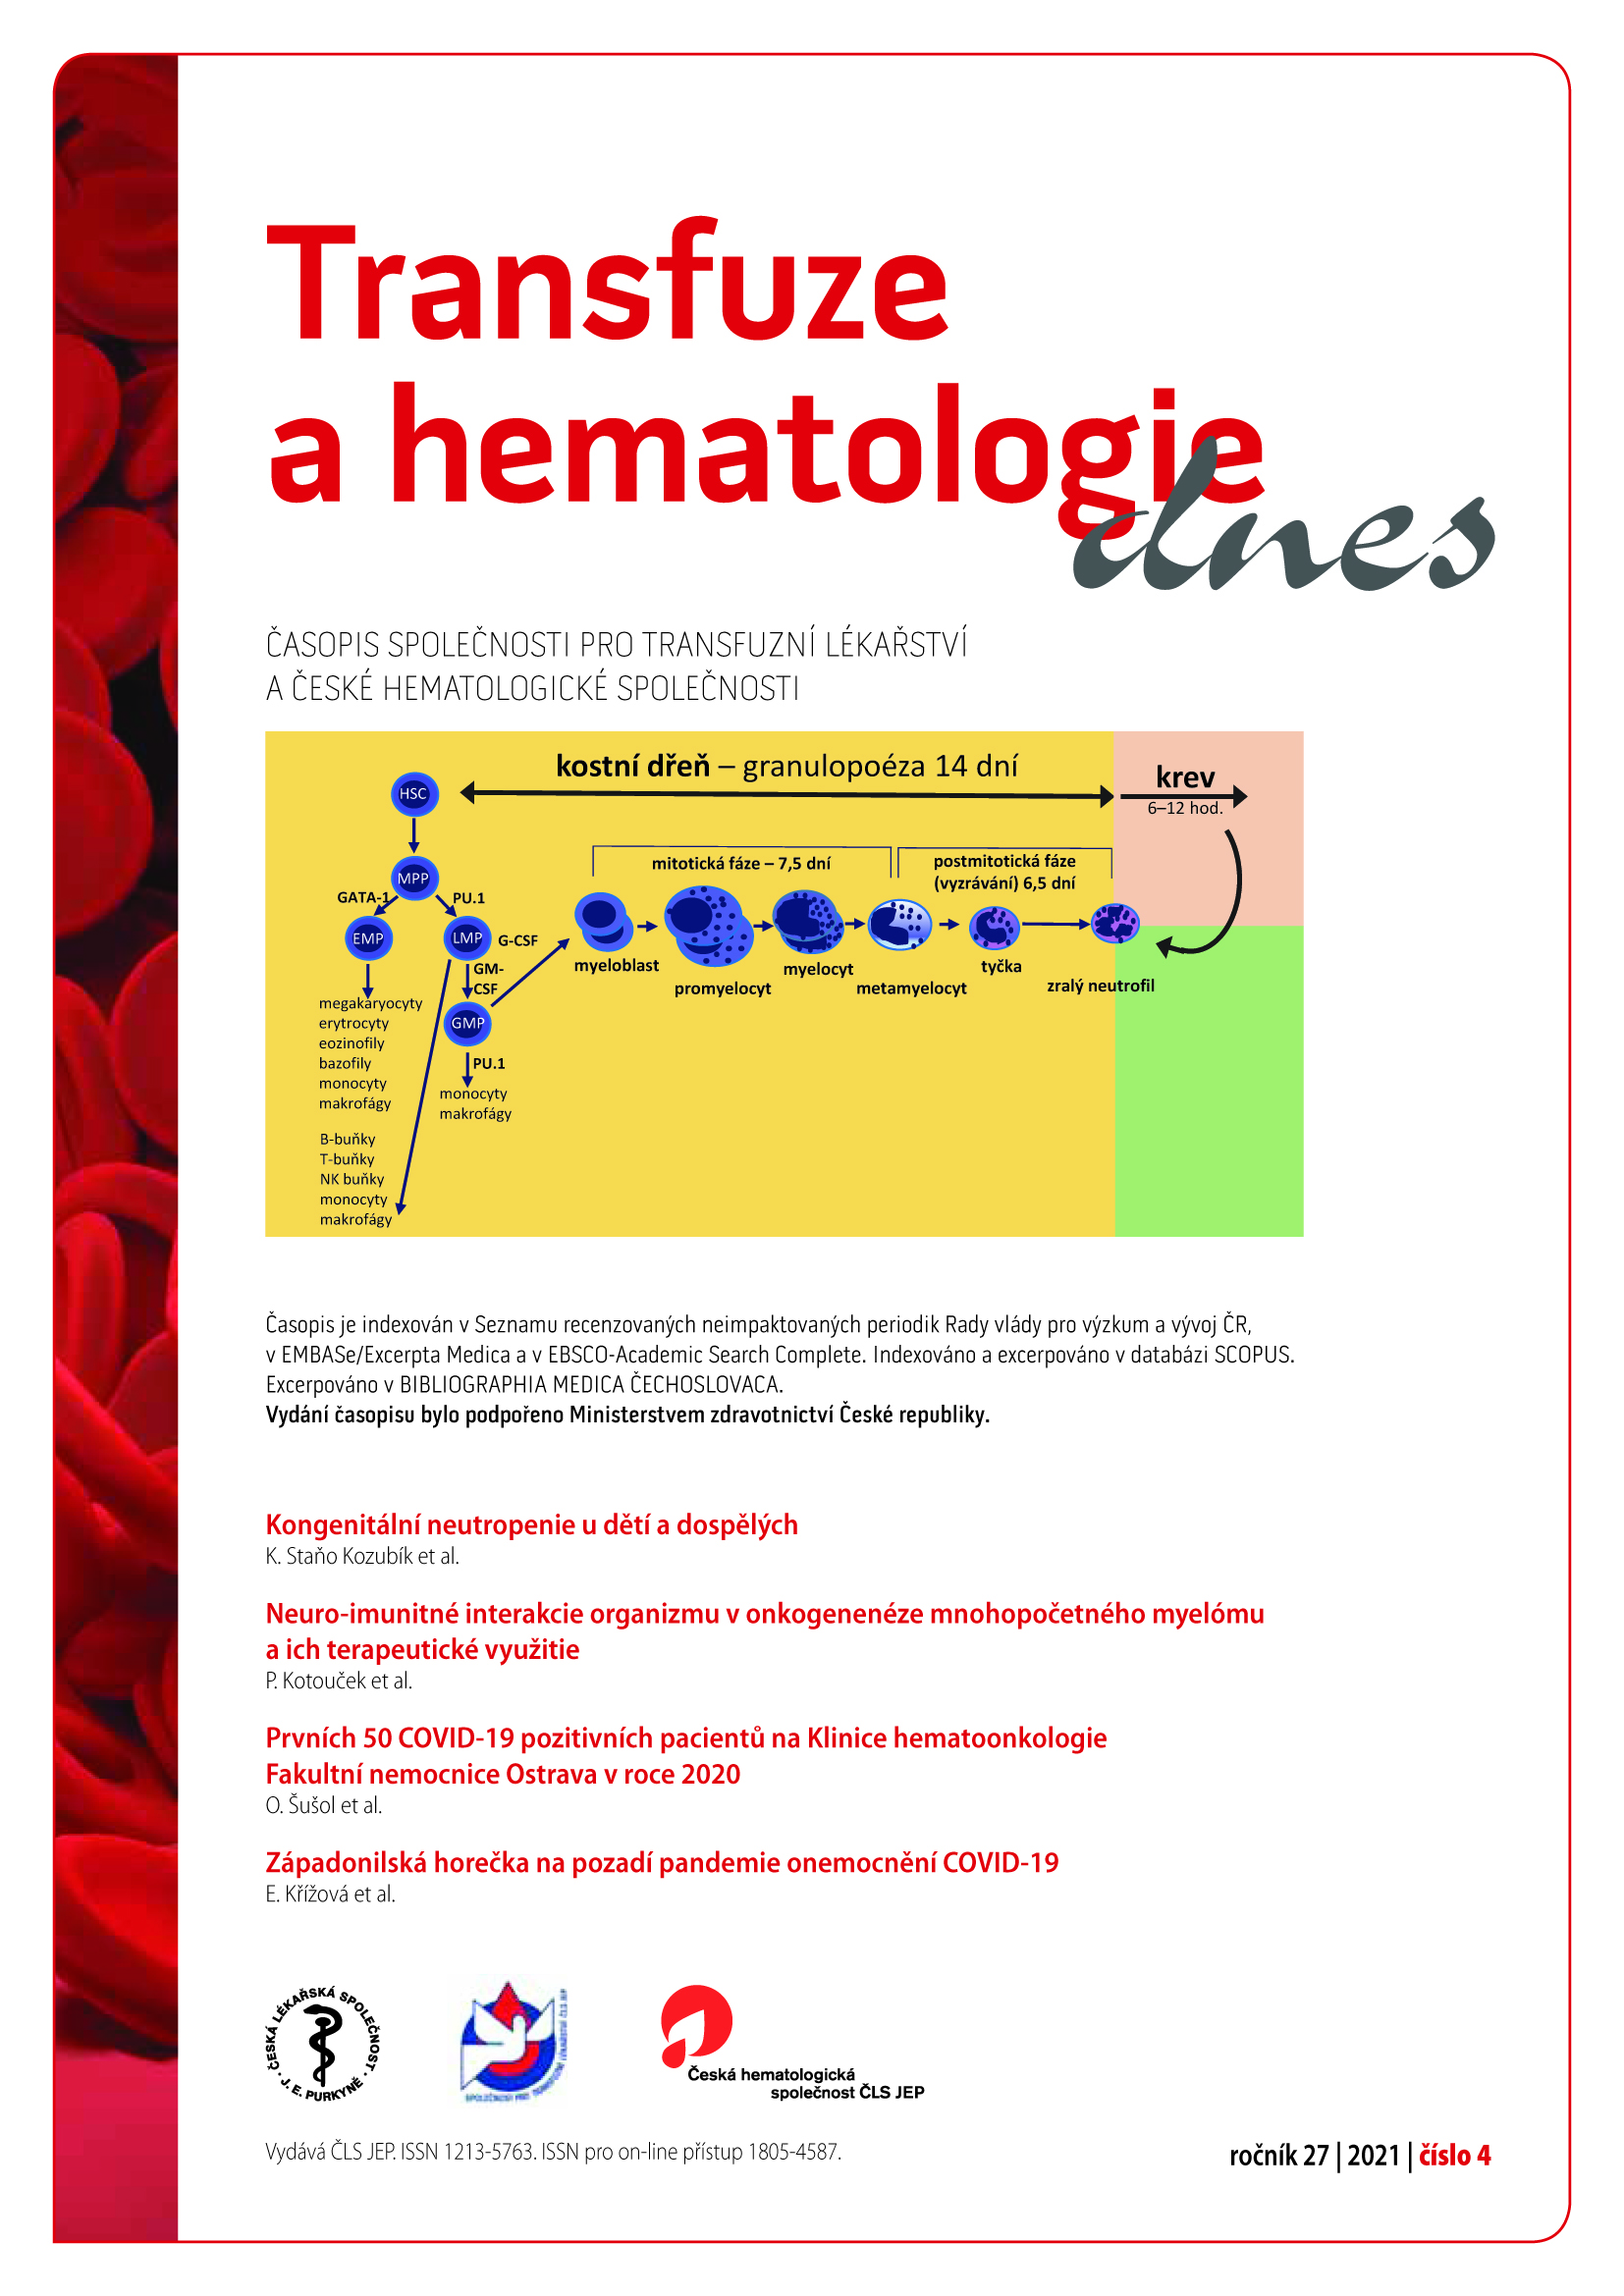 					Náhled Vol 27 No 4 (2021): Transfuze a hematologie dnes
				